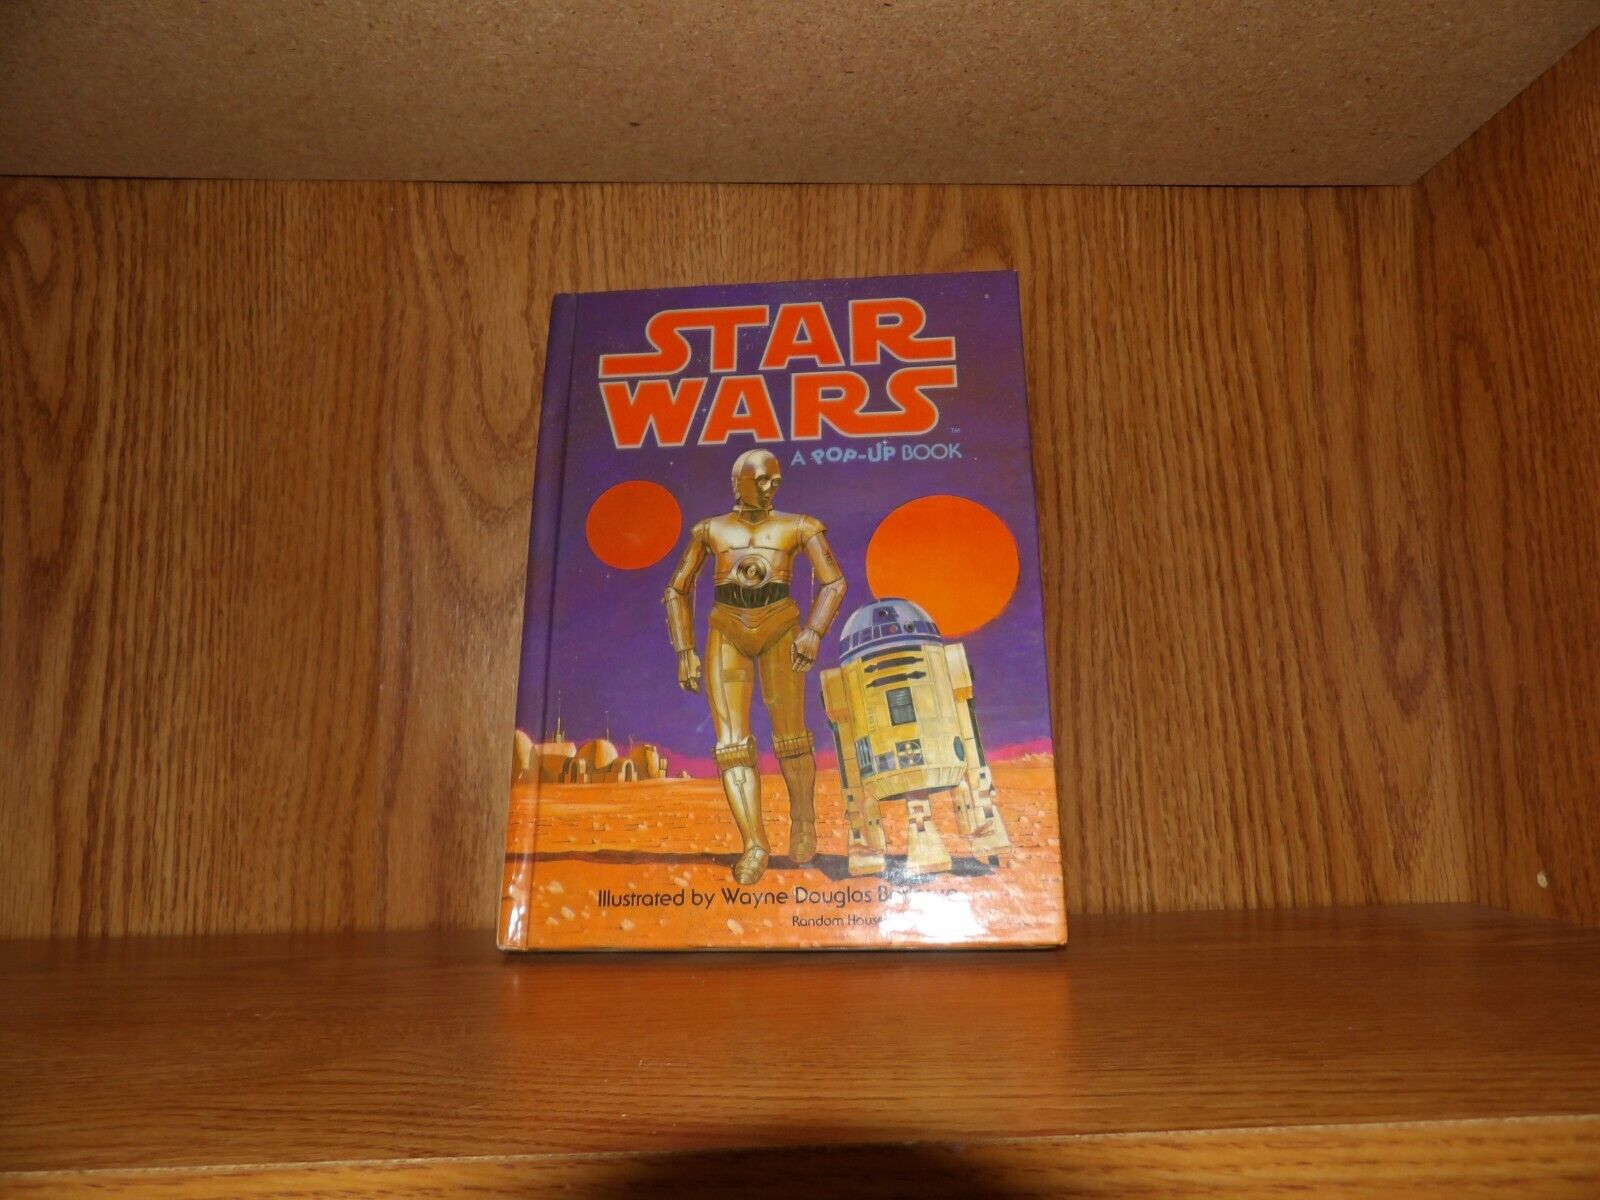 Vintage 1980s Star Wars pop up book